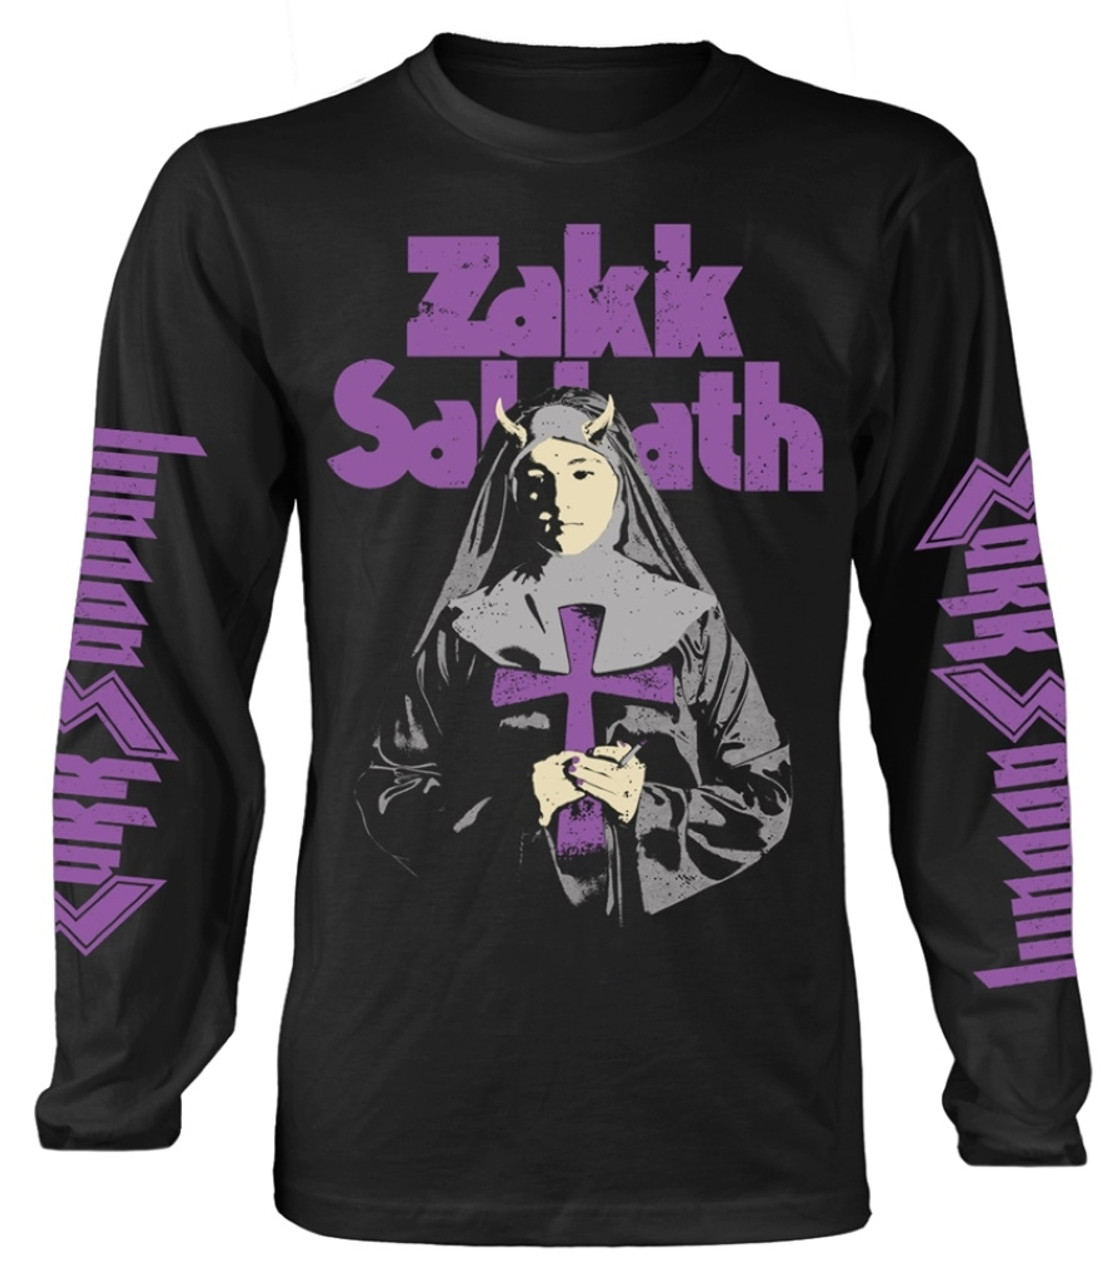 Zakk Sabbath 'Nun' (Black) Long Sleeve Shirt